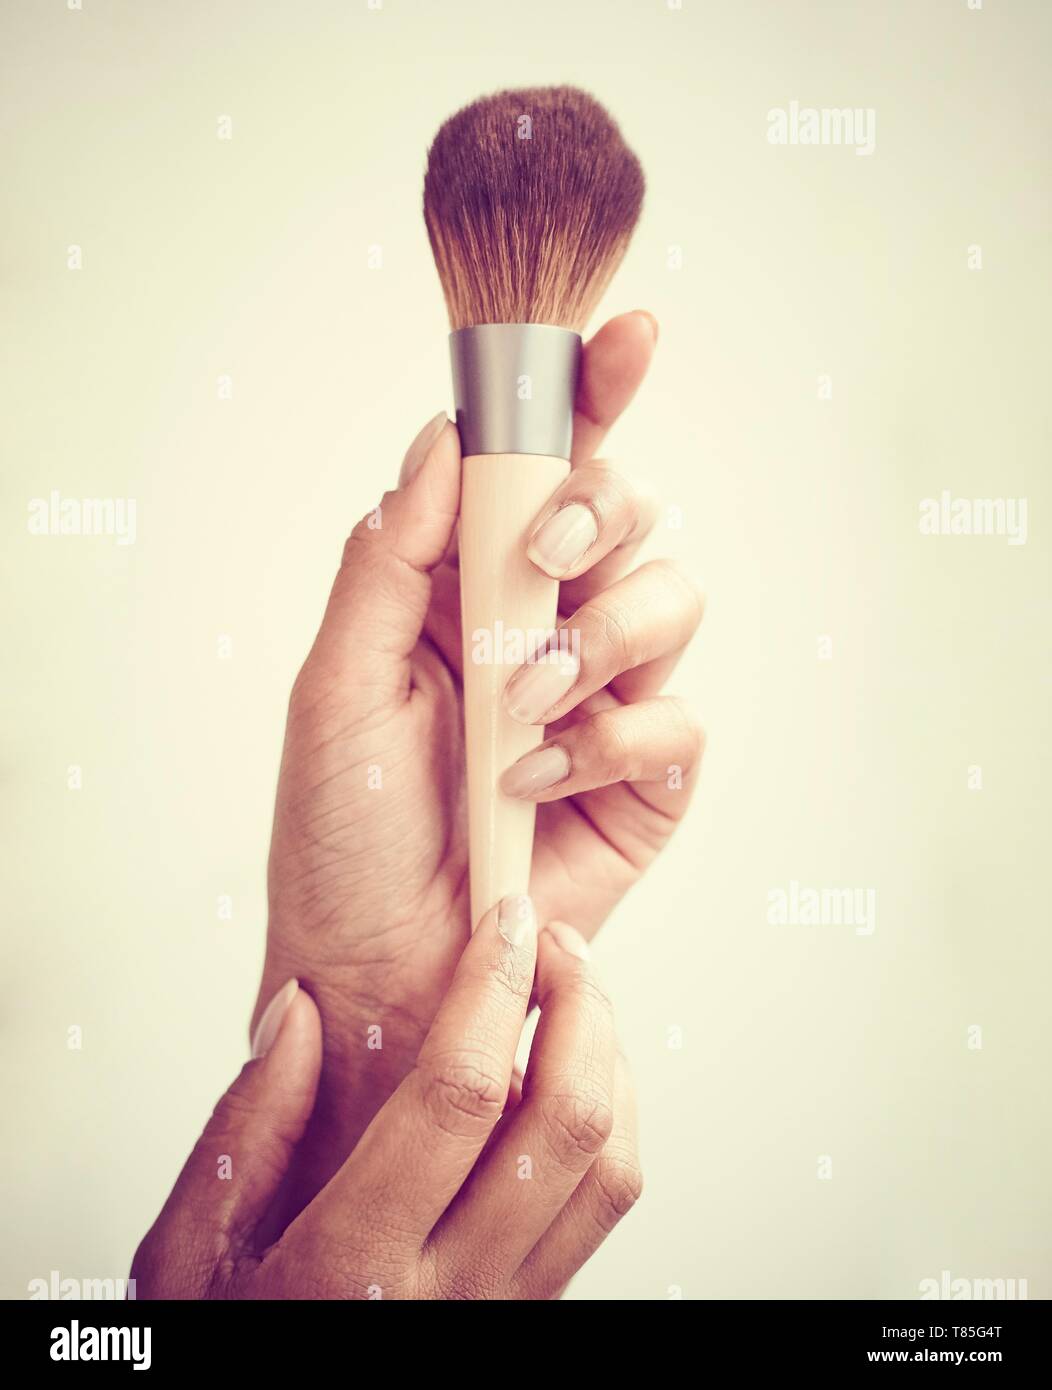 Blusher brush, close up Stock Photo